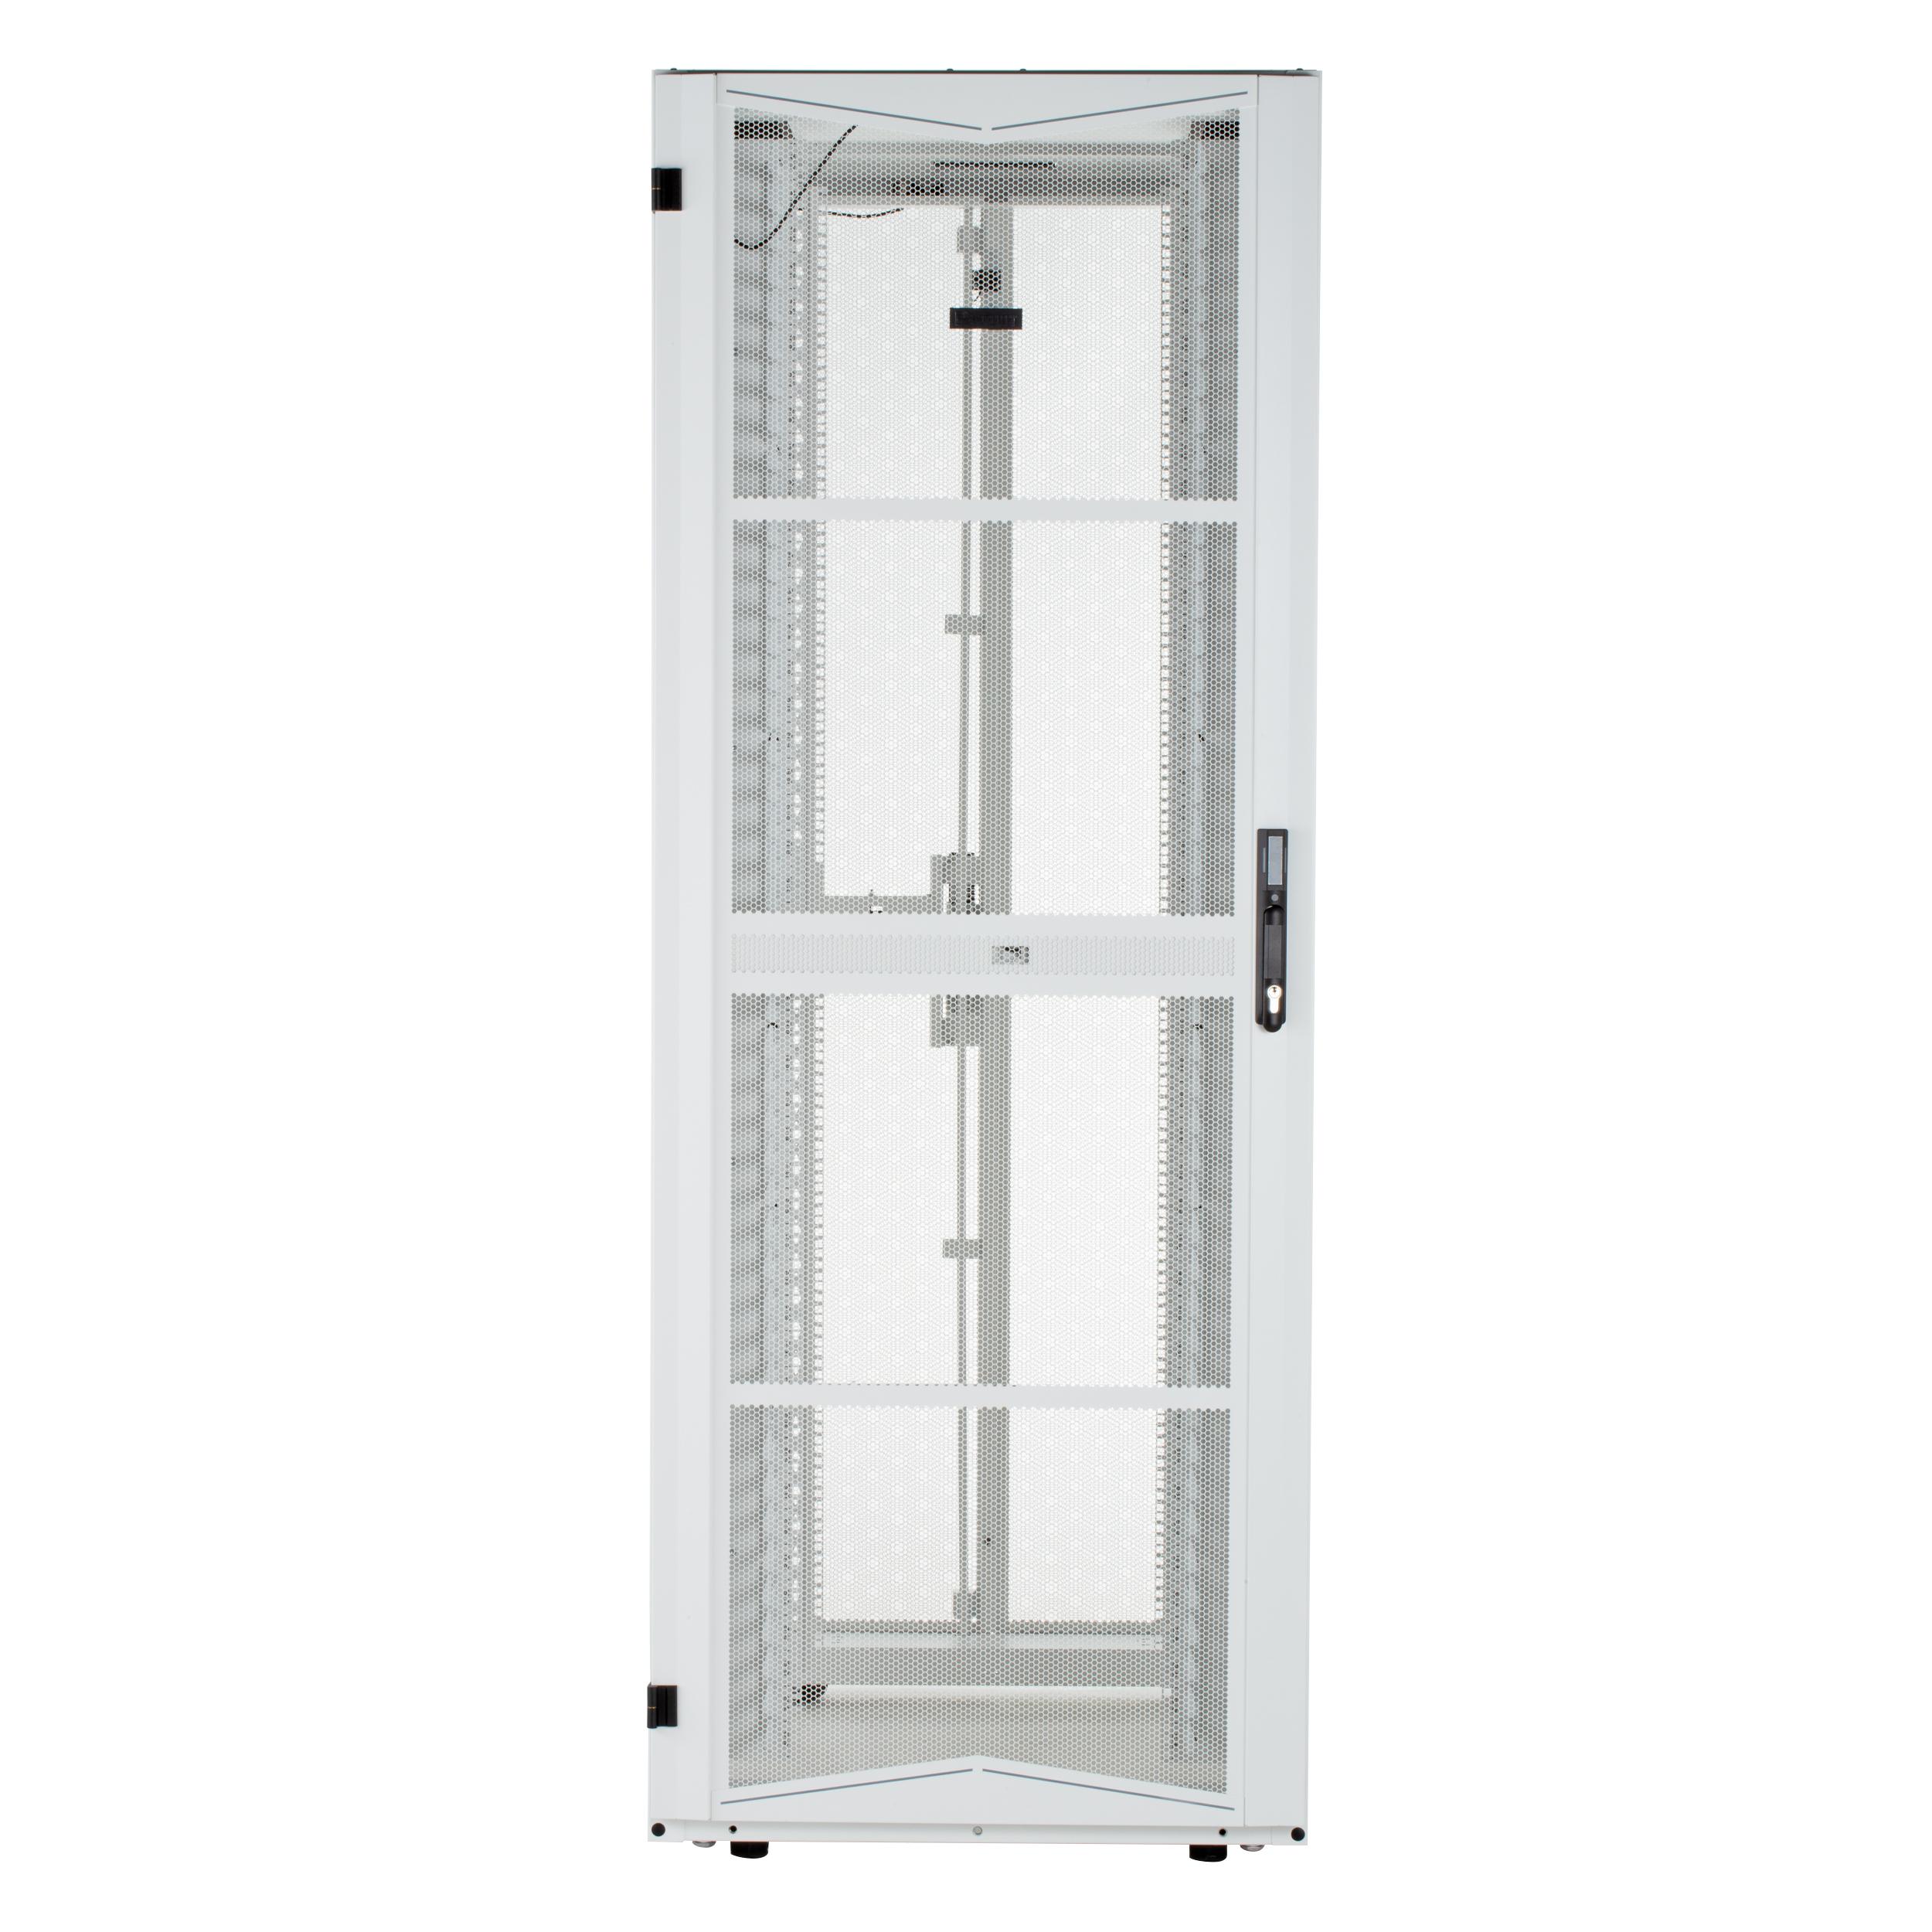 Panduit XG74522WS0001 FlexFusion Cabinet, 700mm x 45RU x 1200mm, White